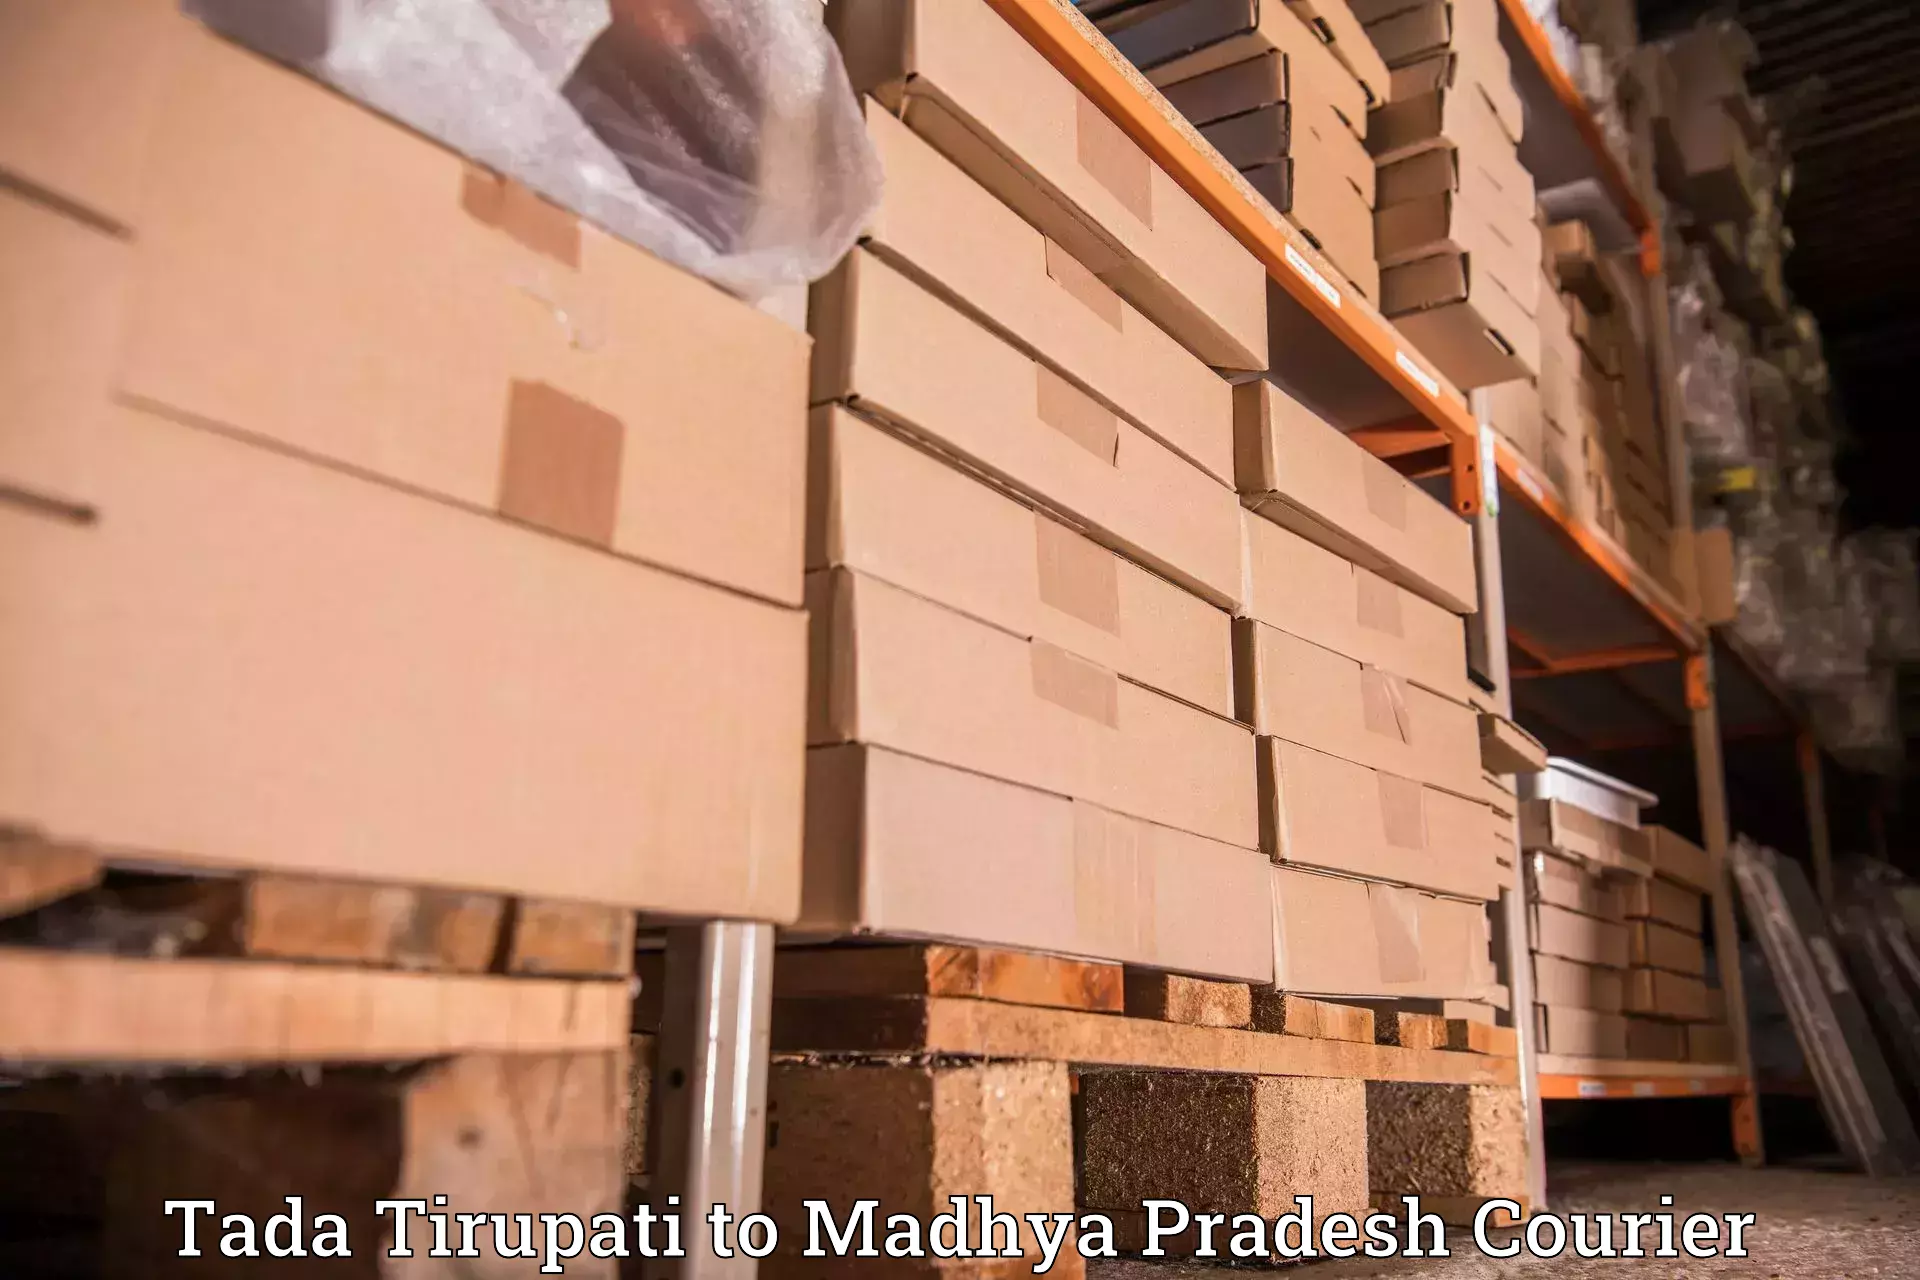 Courier service booking Tada Tirupati to Nagod